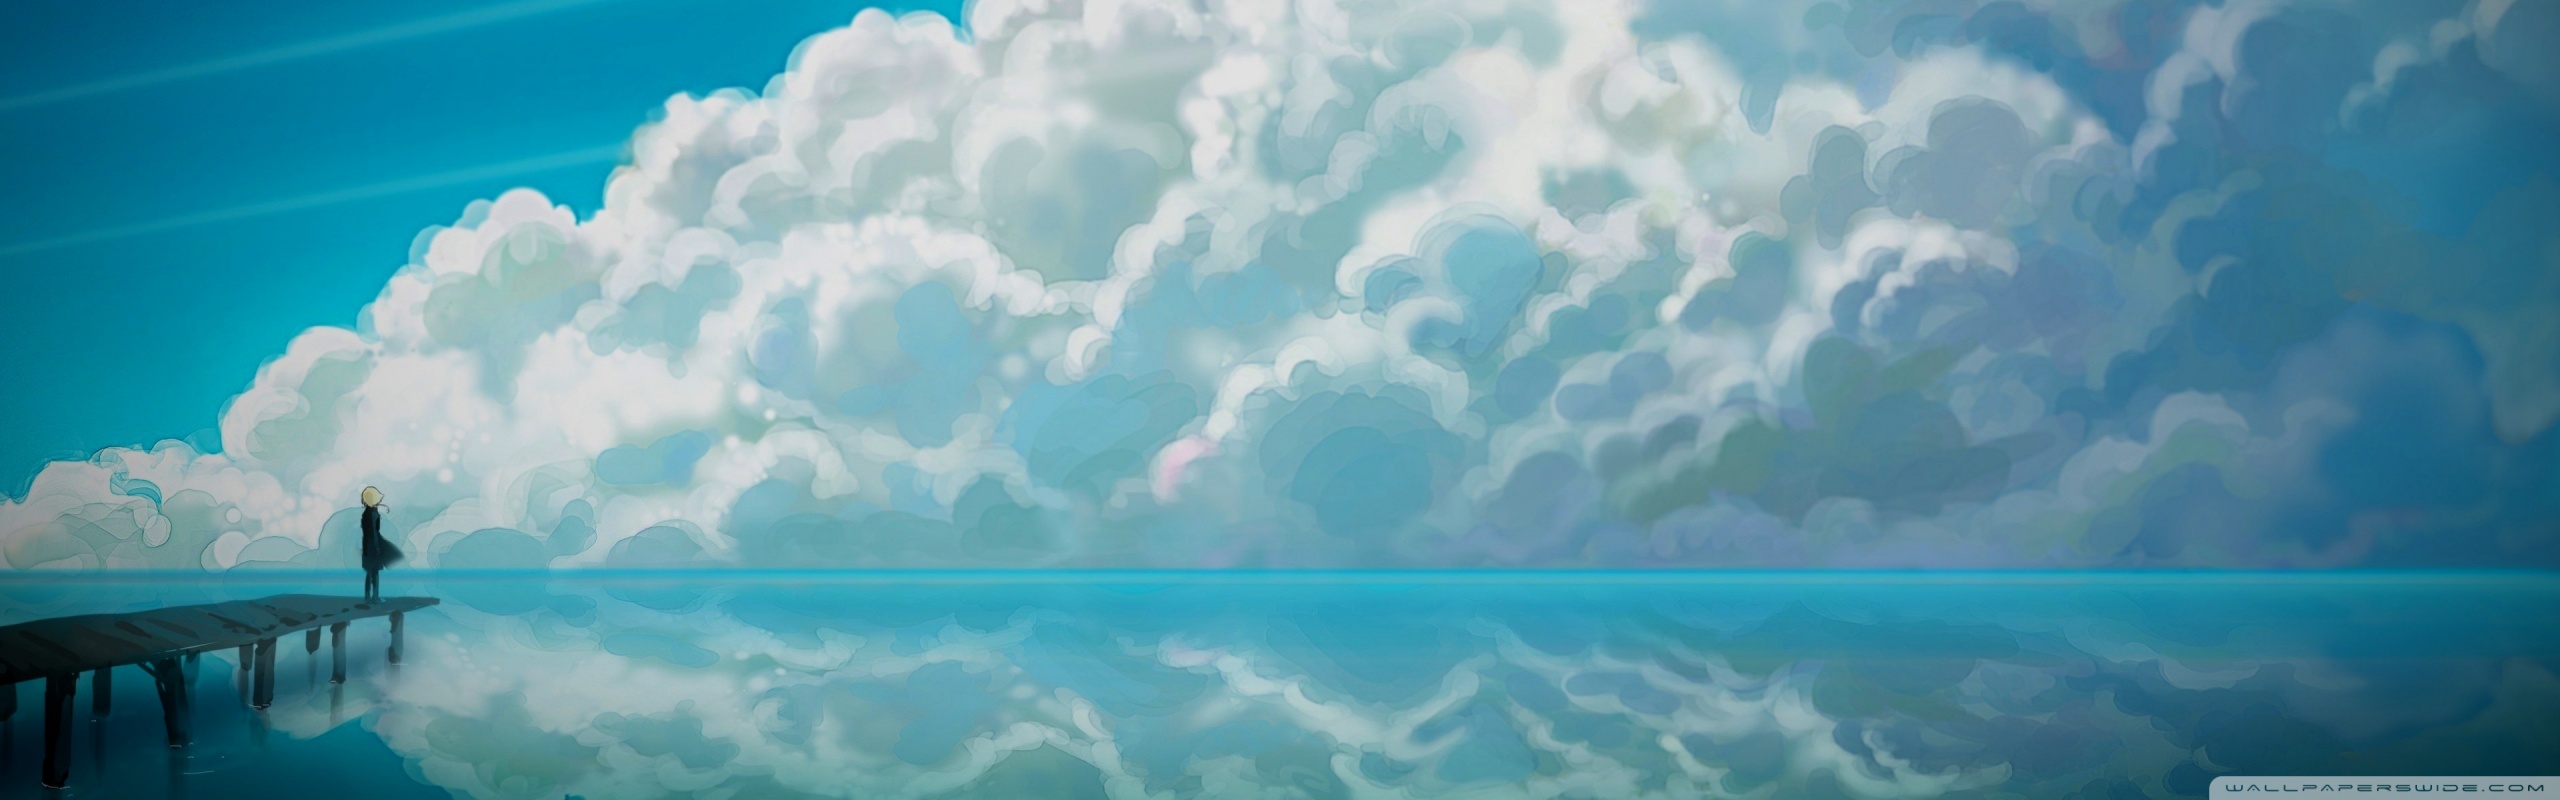 Sky Anime Ultra Hd Desktop Background Wallpaper For Widescreen